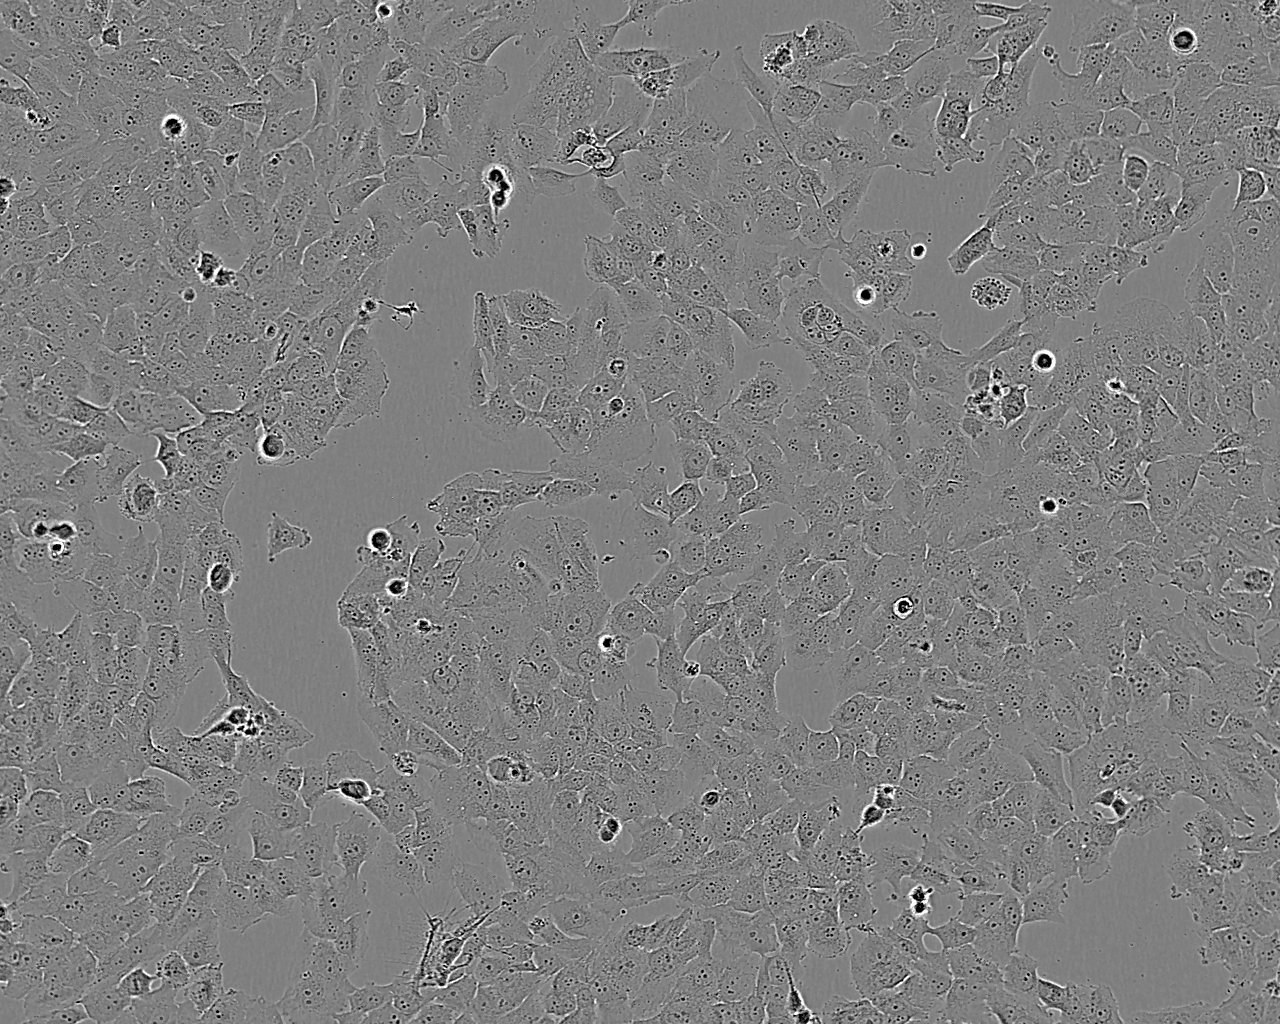 WM115 epithelioid cells人黑色素瘤细胞系,WM115 epithelioid cells